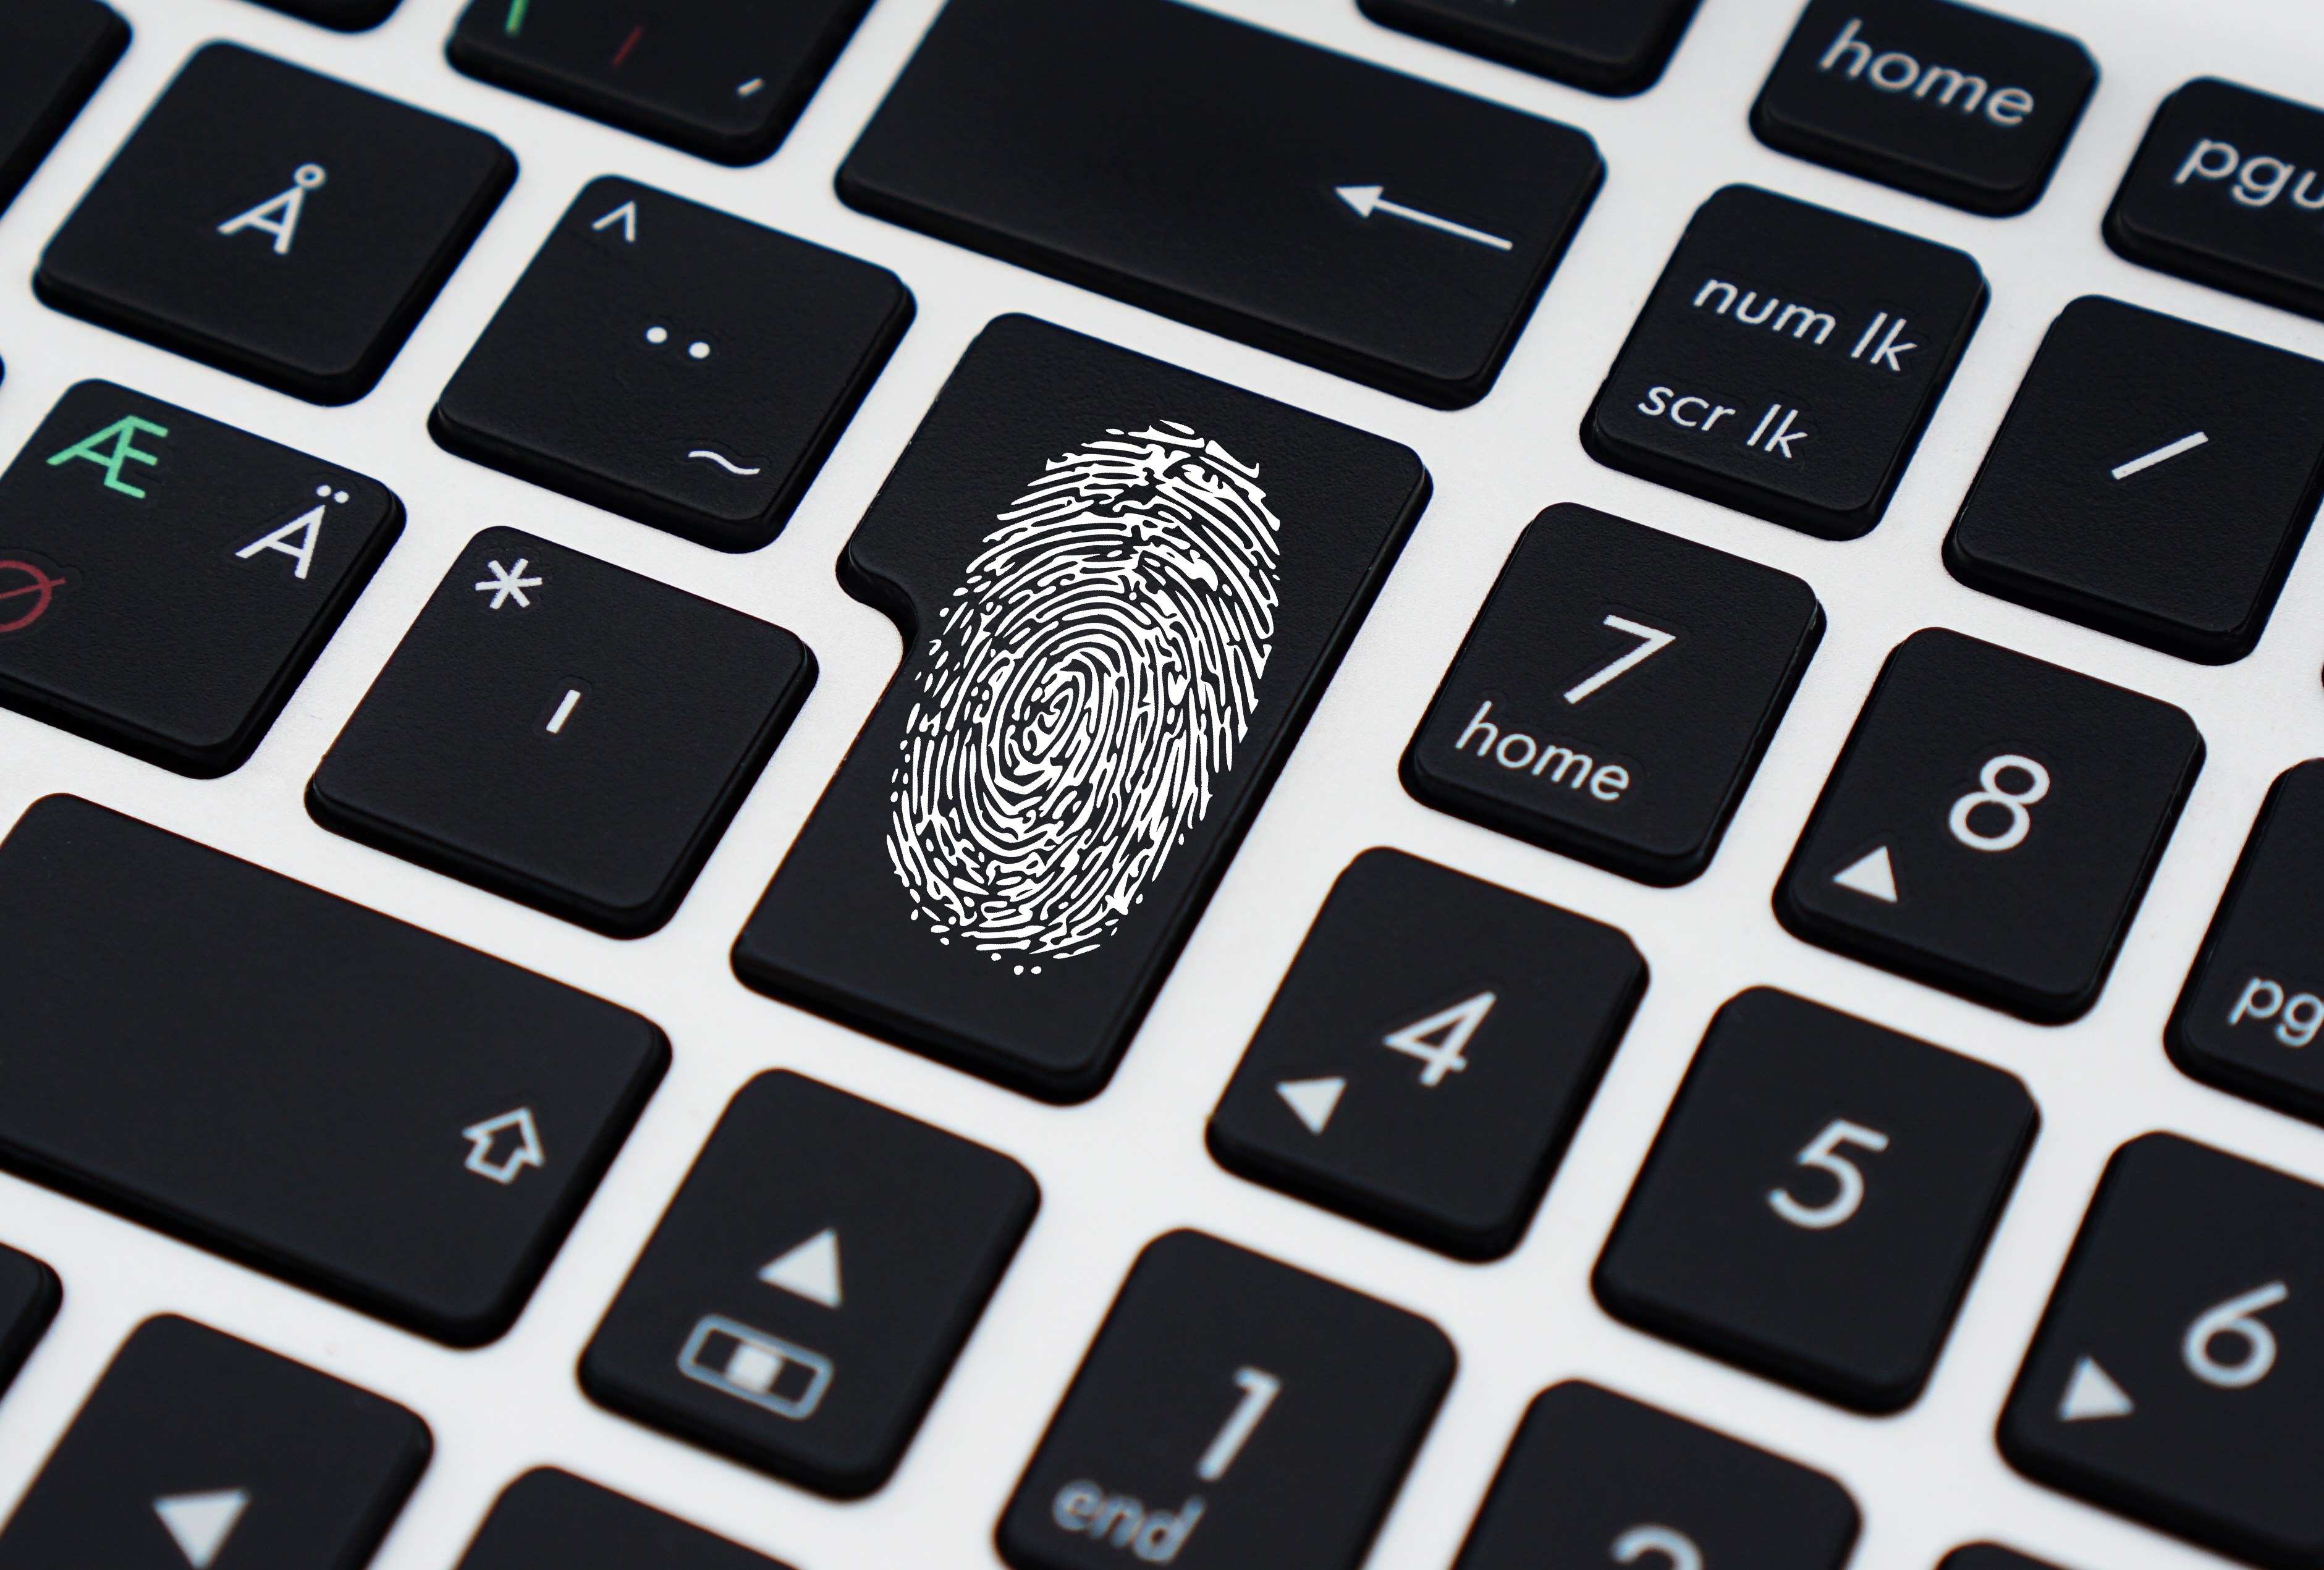 File Sharing Security & IT Recruitment fingerprint on keyboard